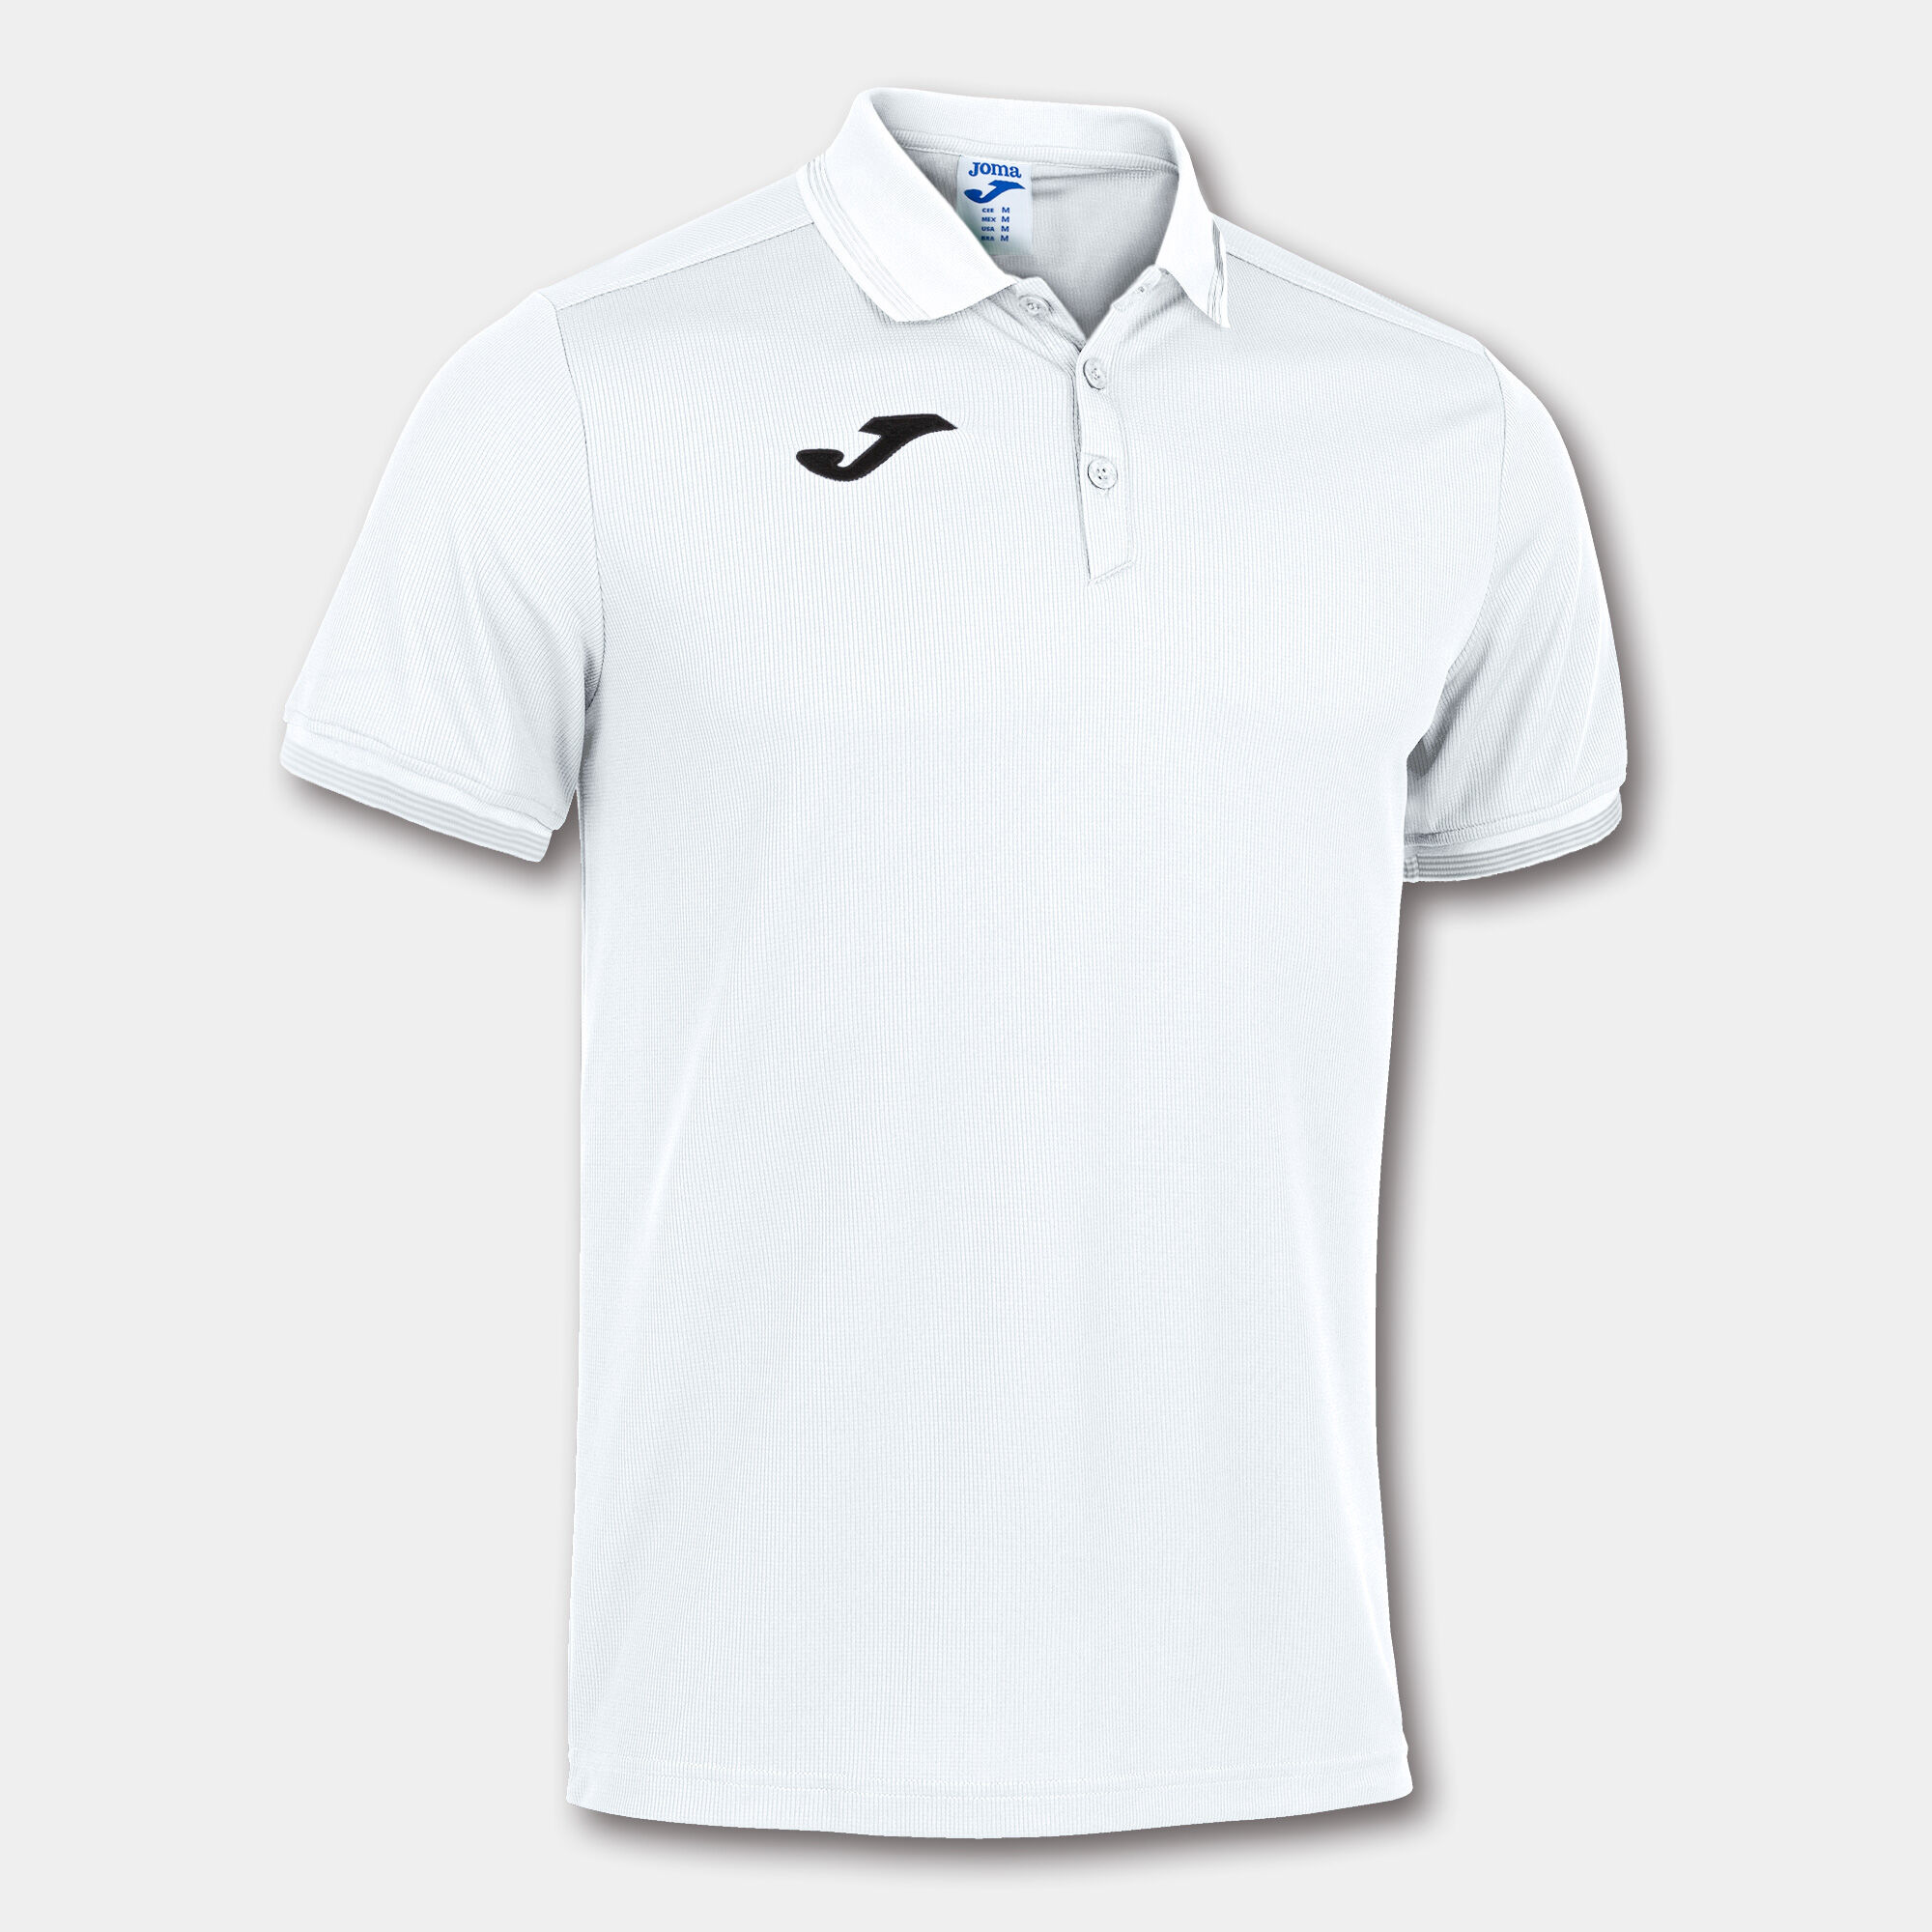 Speels schaal sap Polo shirt short-sleeve man Campus III white | JOMA®